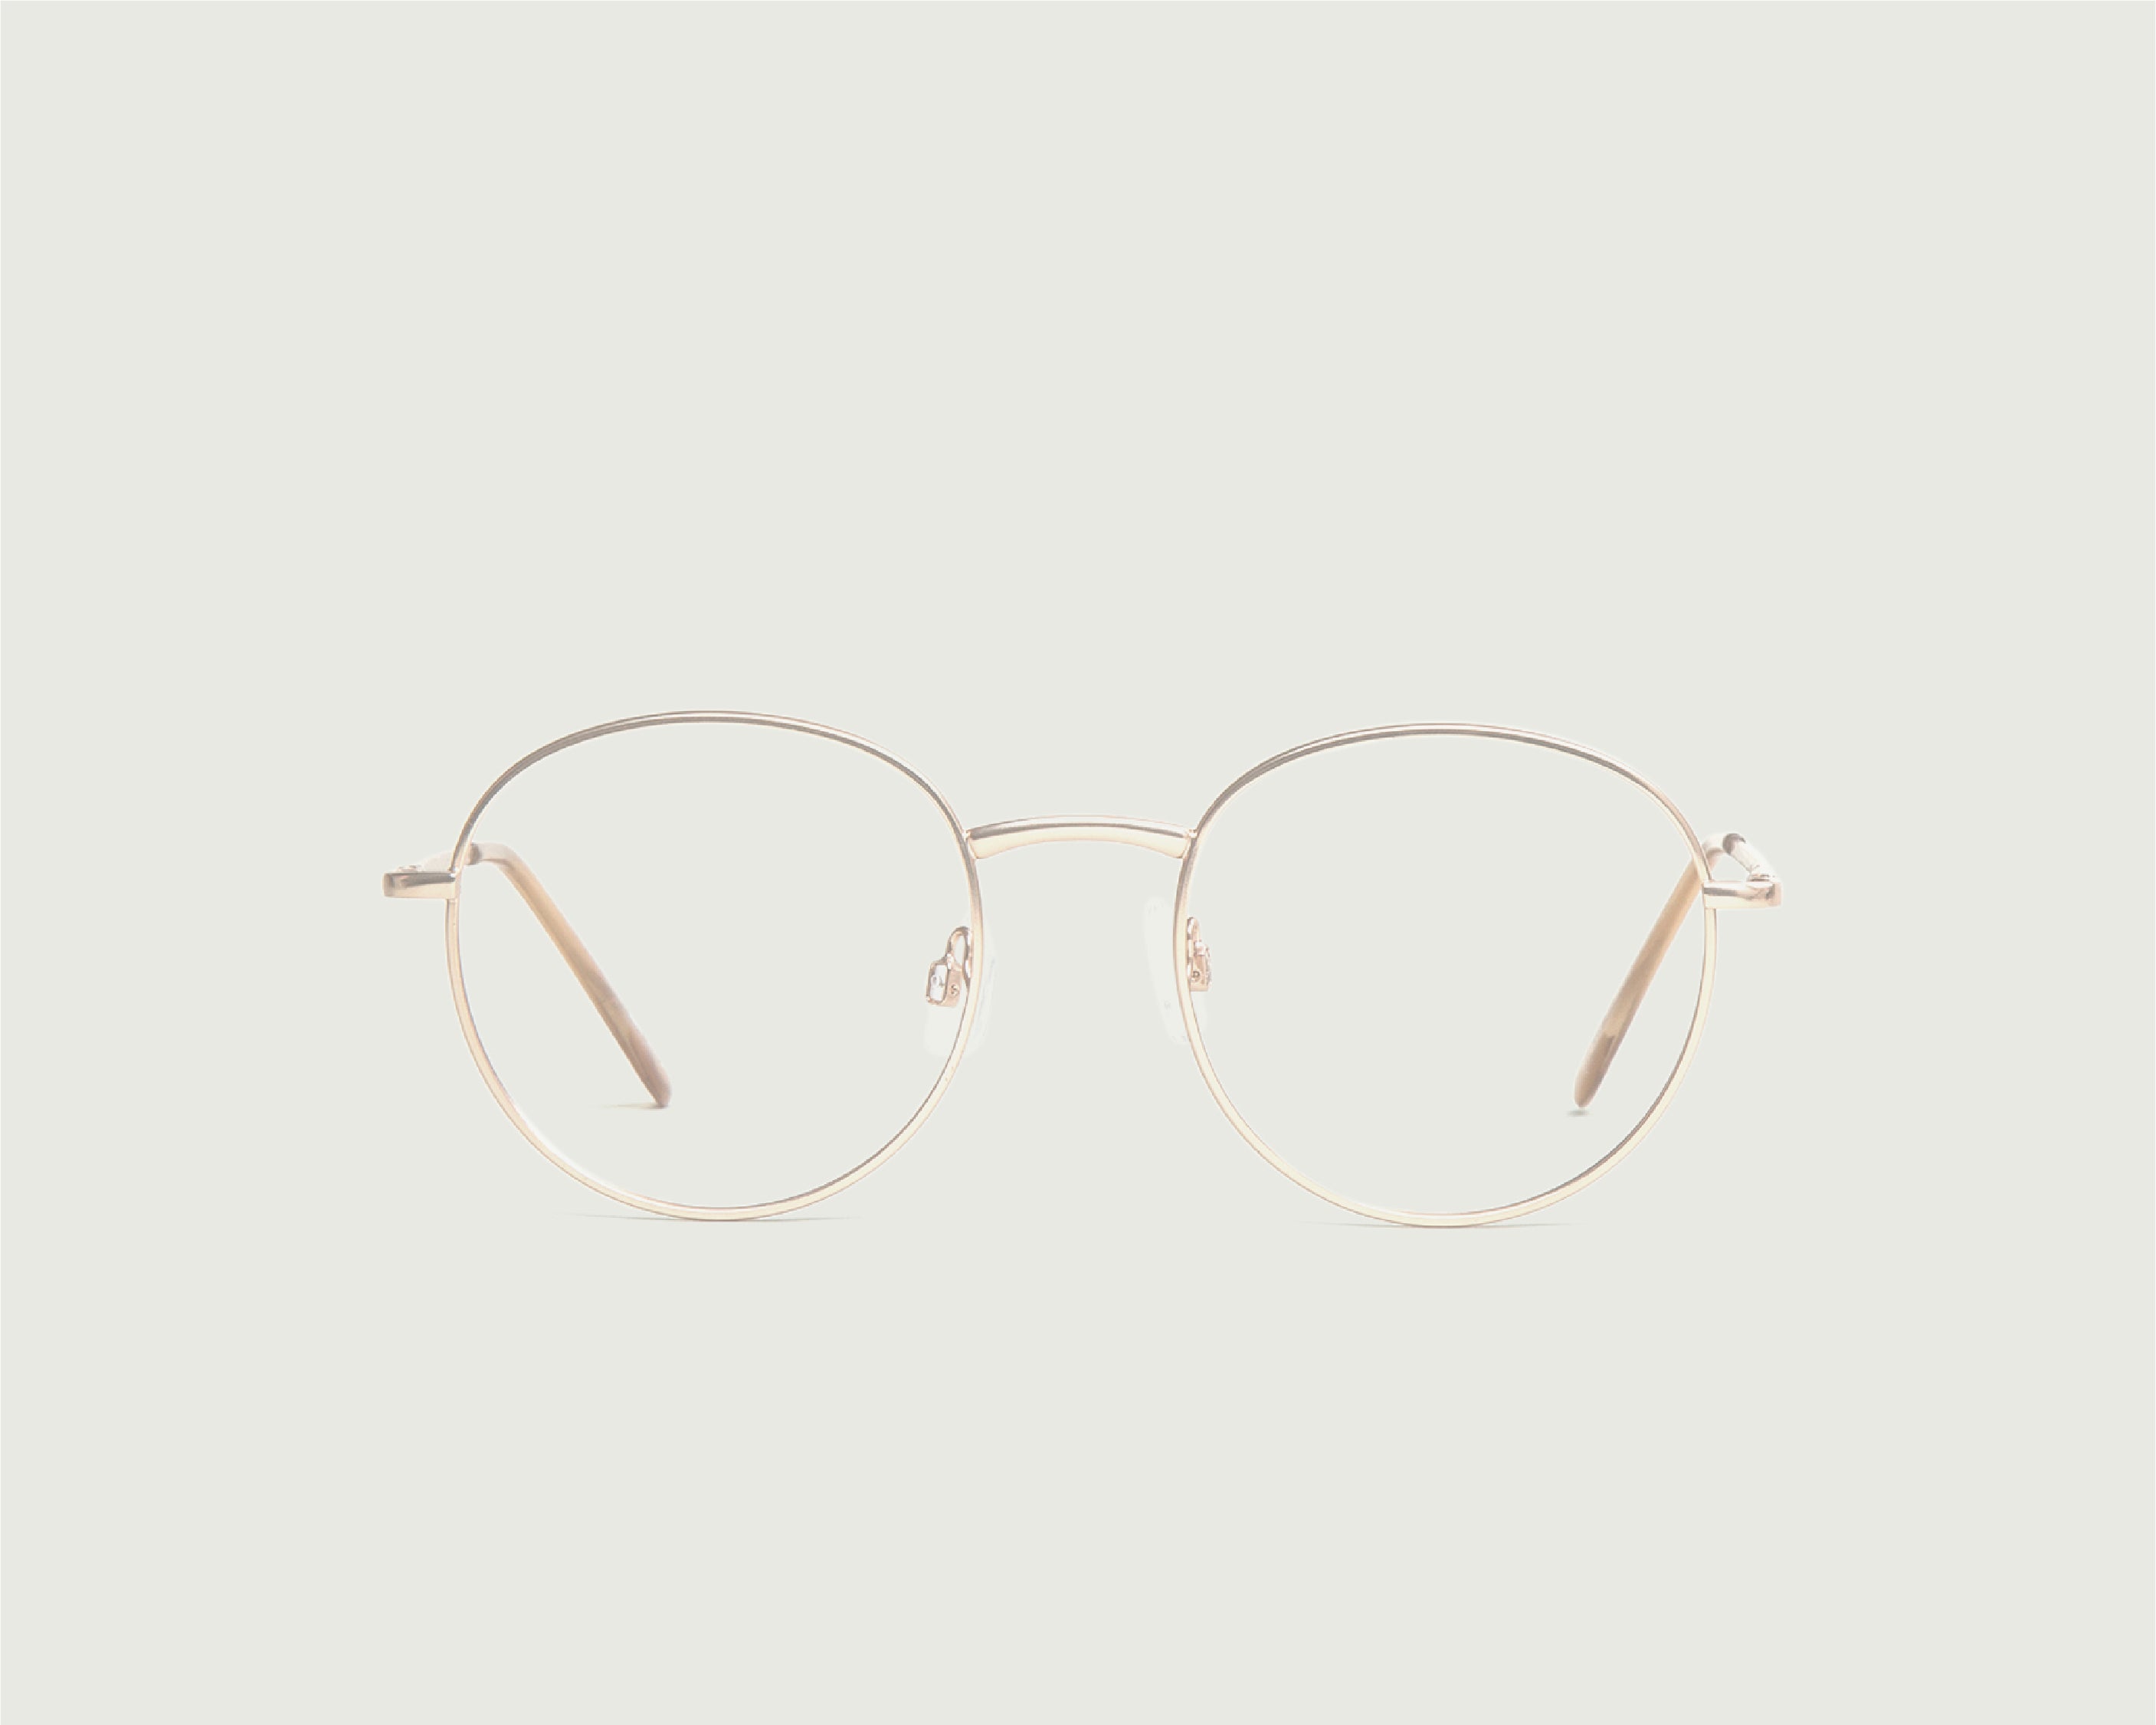 Skin::Jett Anti-Radiation Glasses round gold metal front (6627767025718)